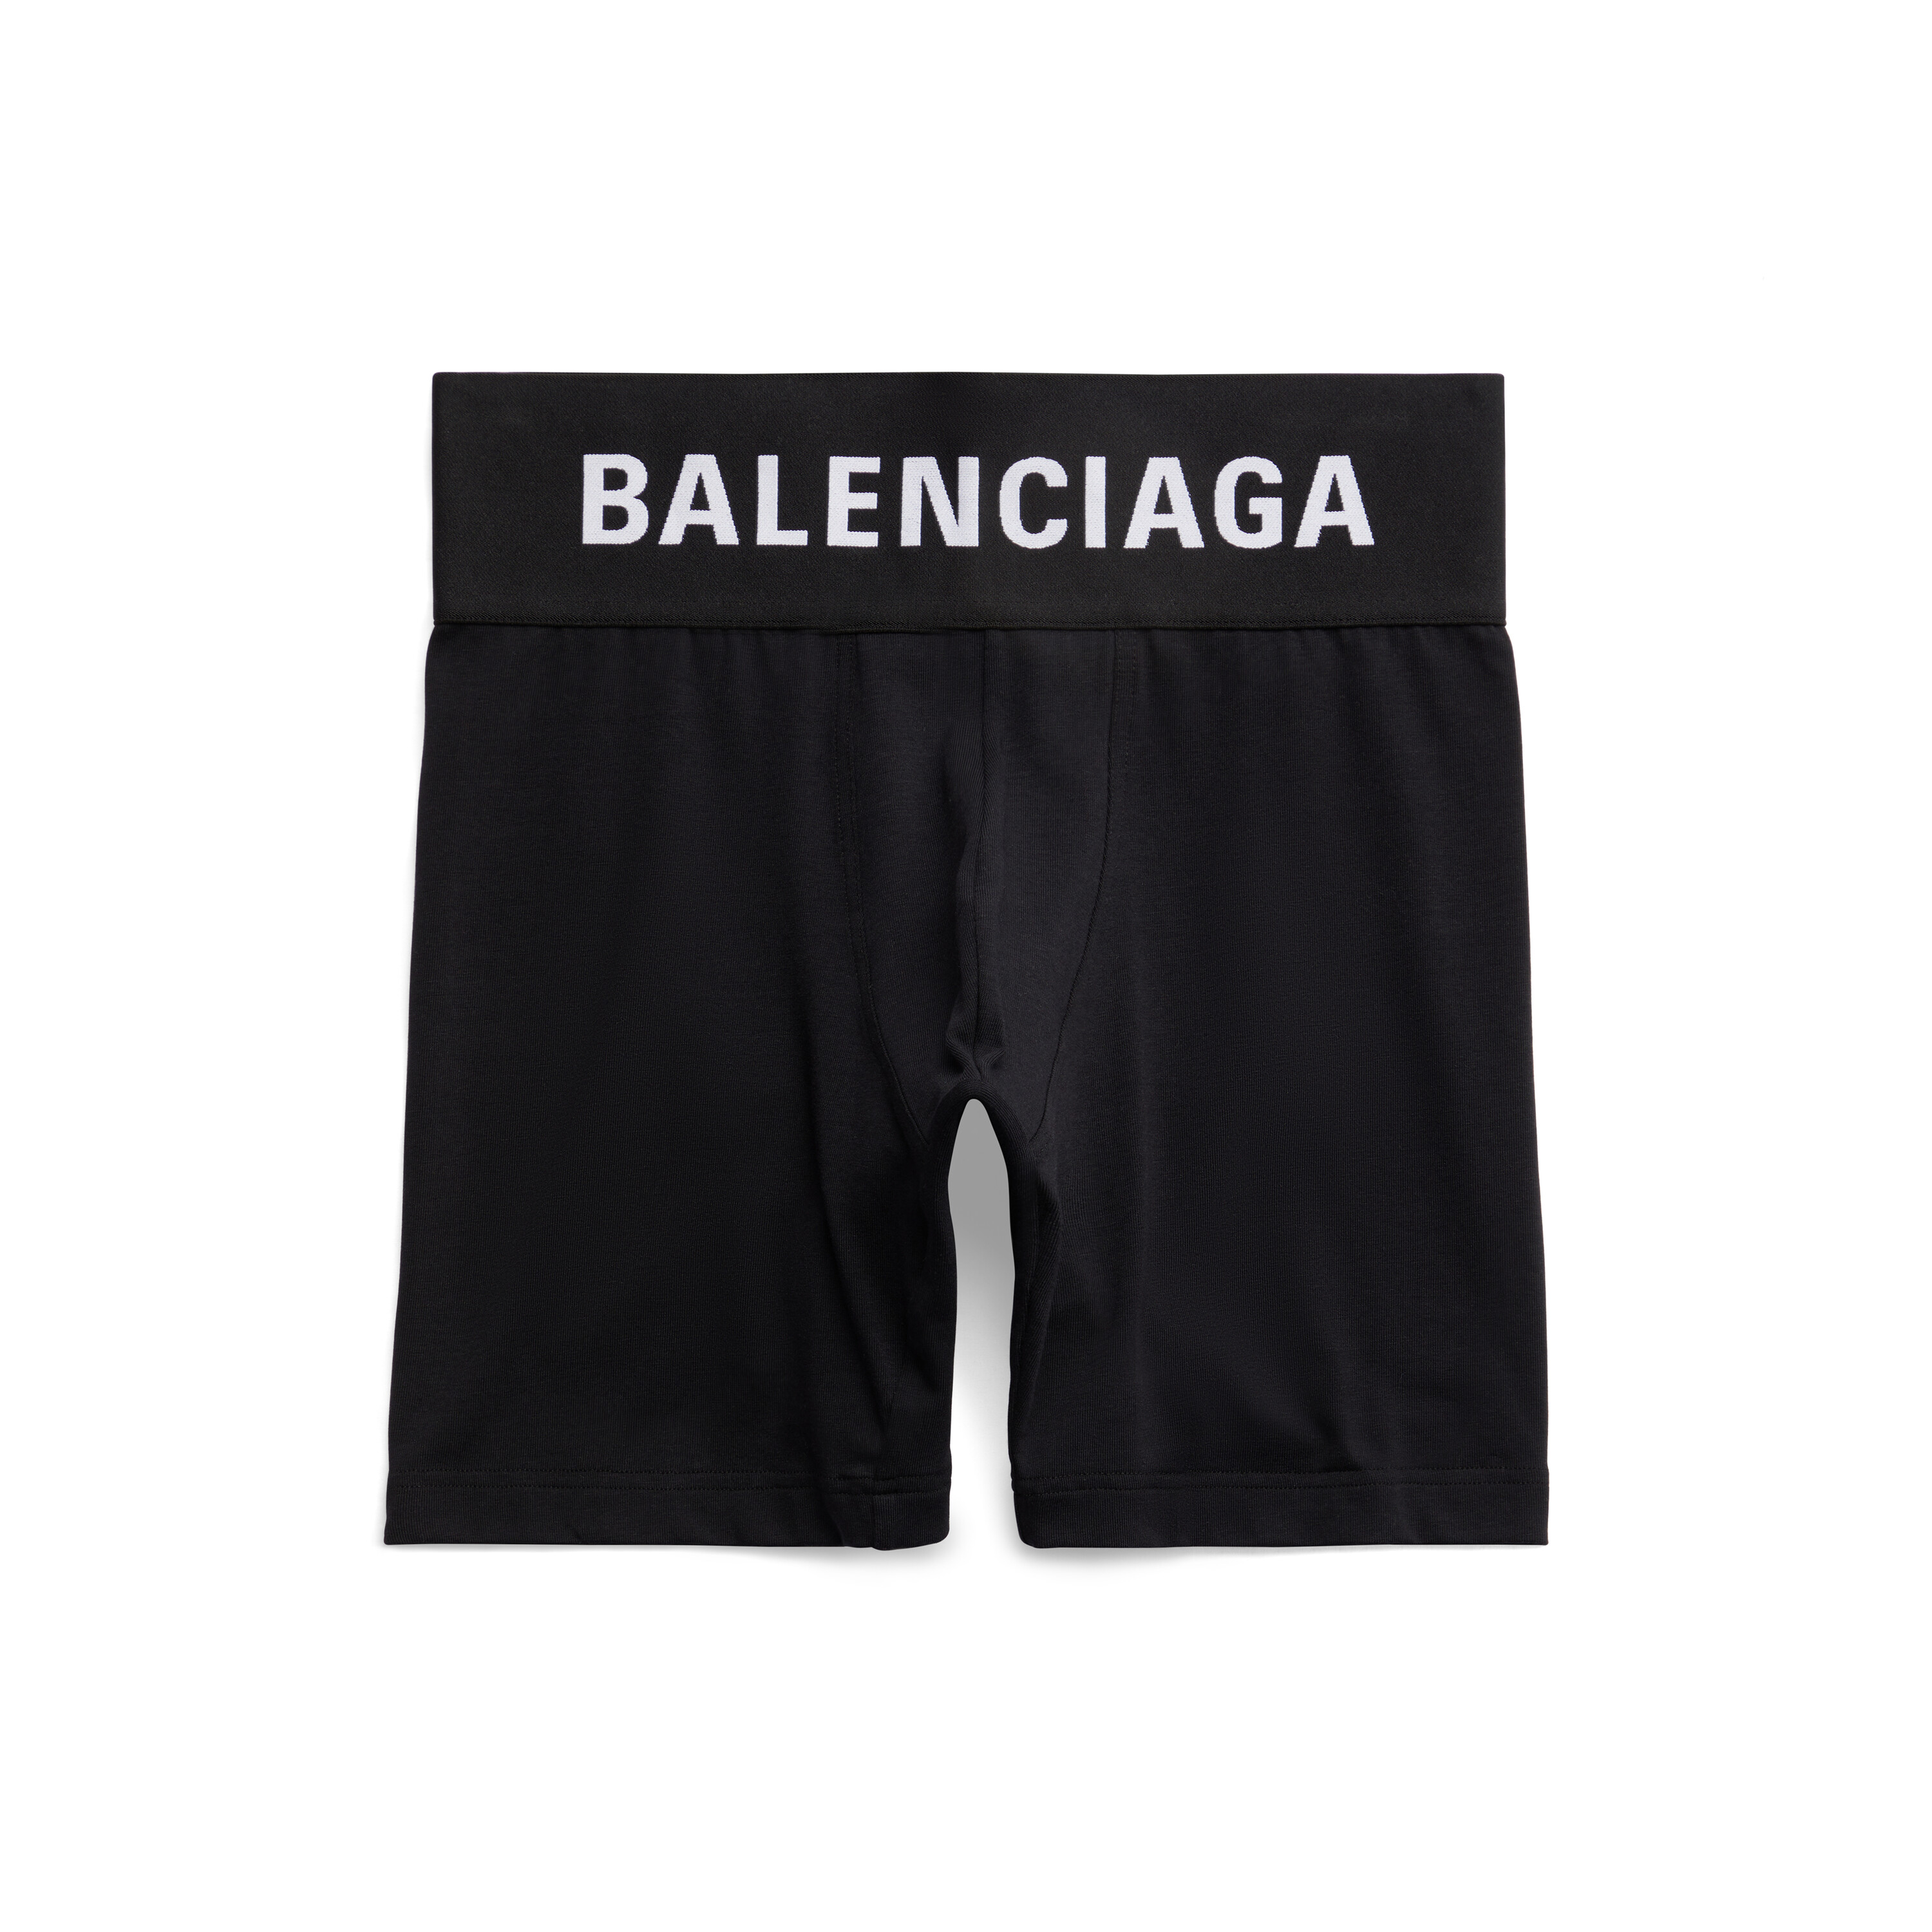 Balenciaga Men's Underwear Boxers - Clothing